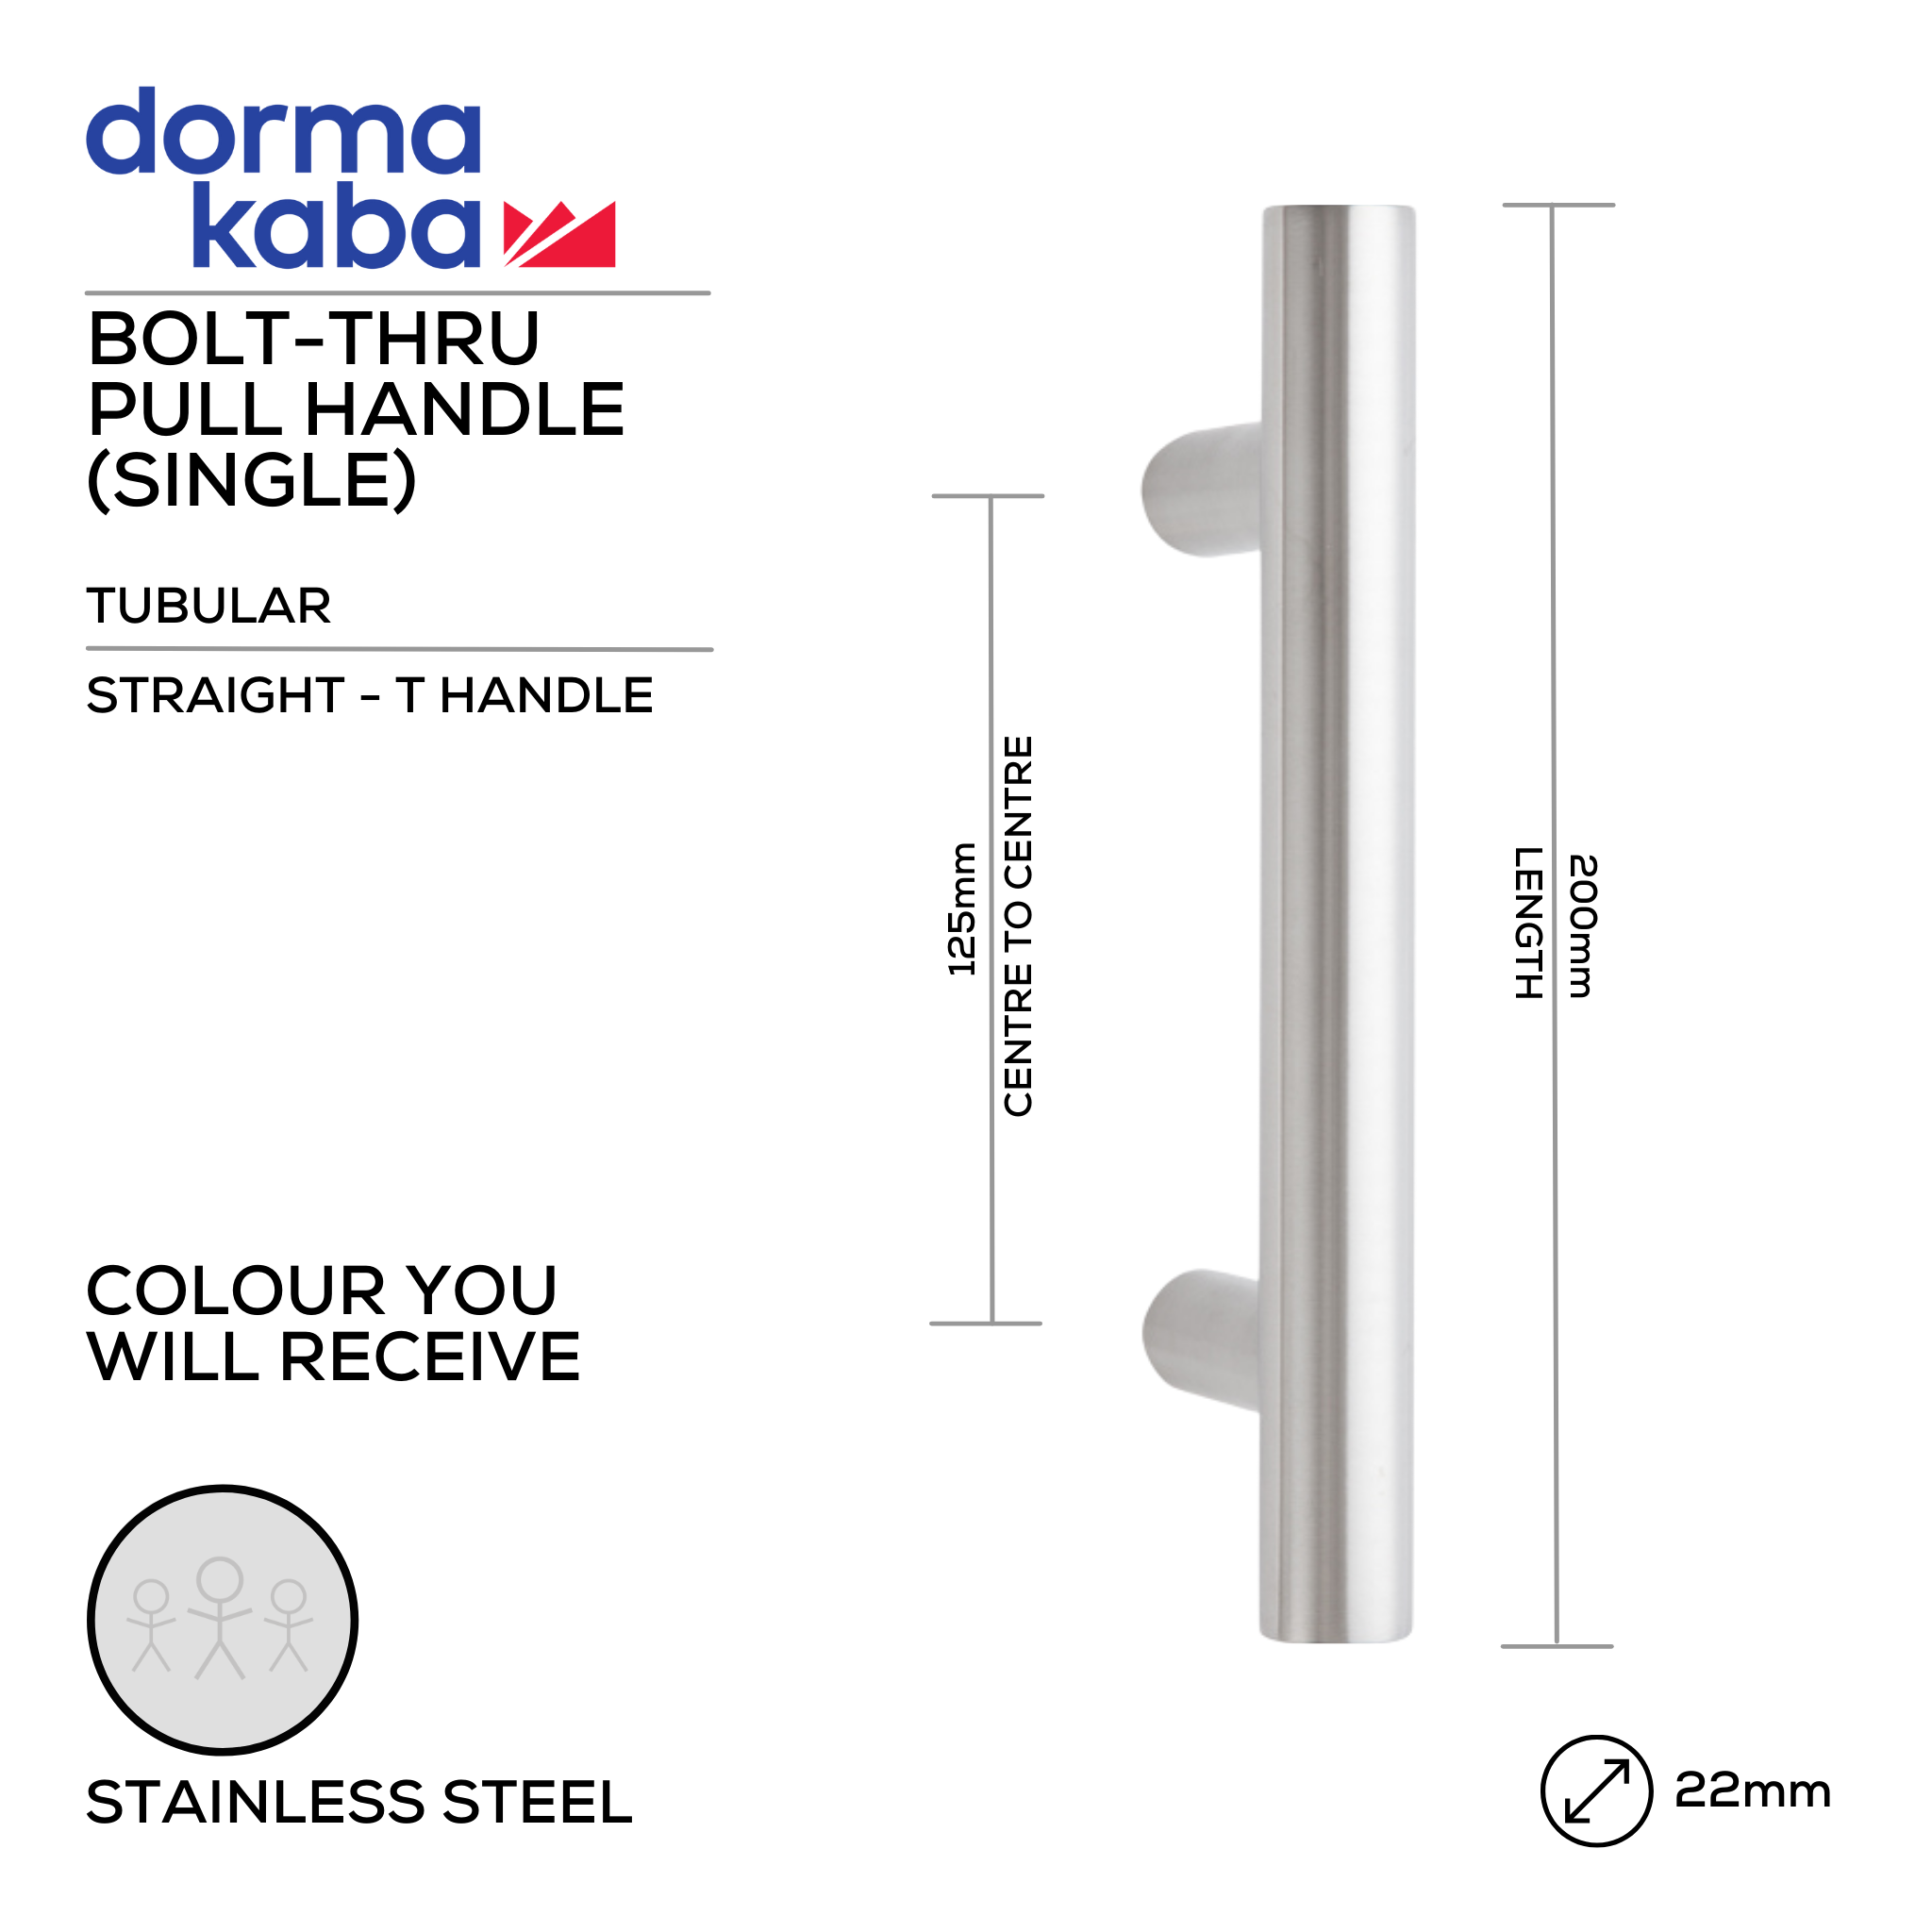 DPH 209 BT, Pull Handle, Tubular, Straight, T Handle, BoltThru, 22mm (Ø) x 200mm (l) x 125mm (ctc), Stainless Steel, DORMAKABA